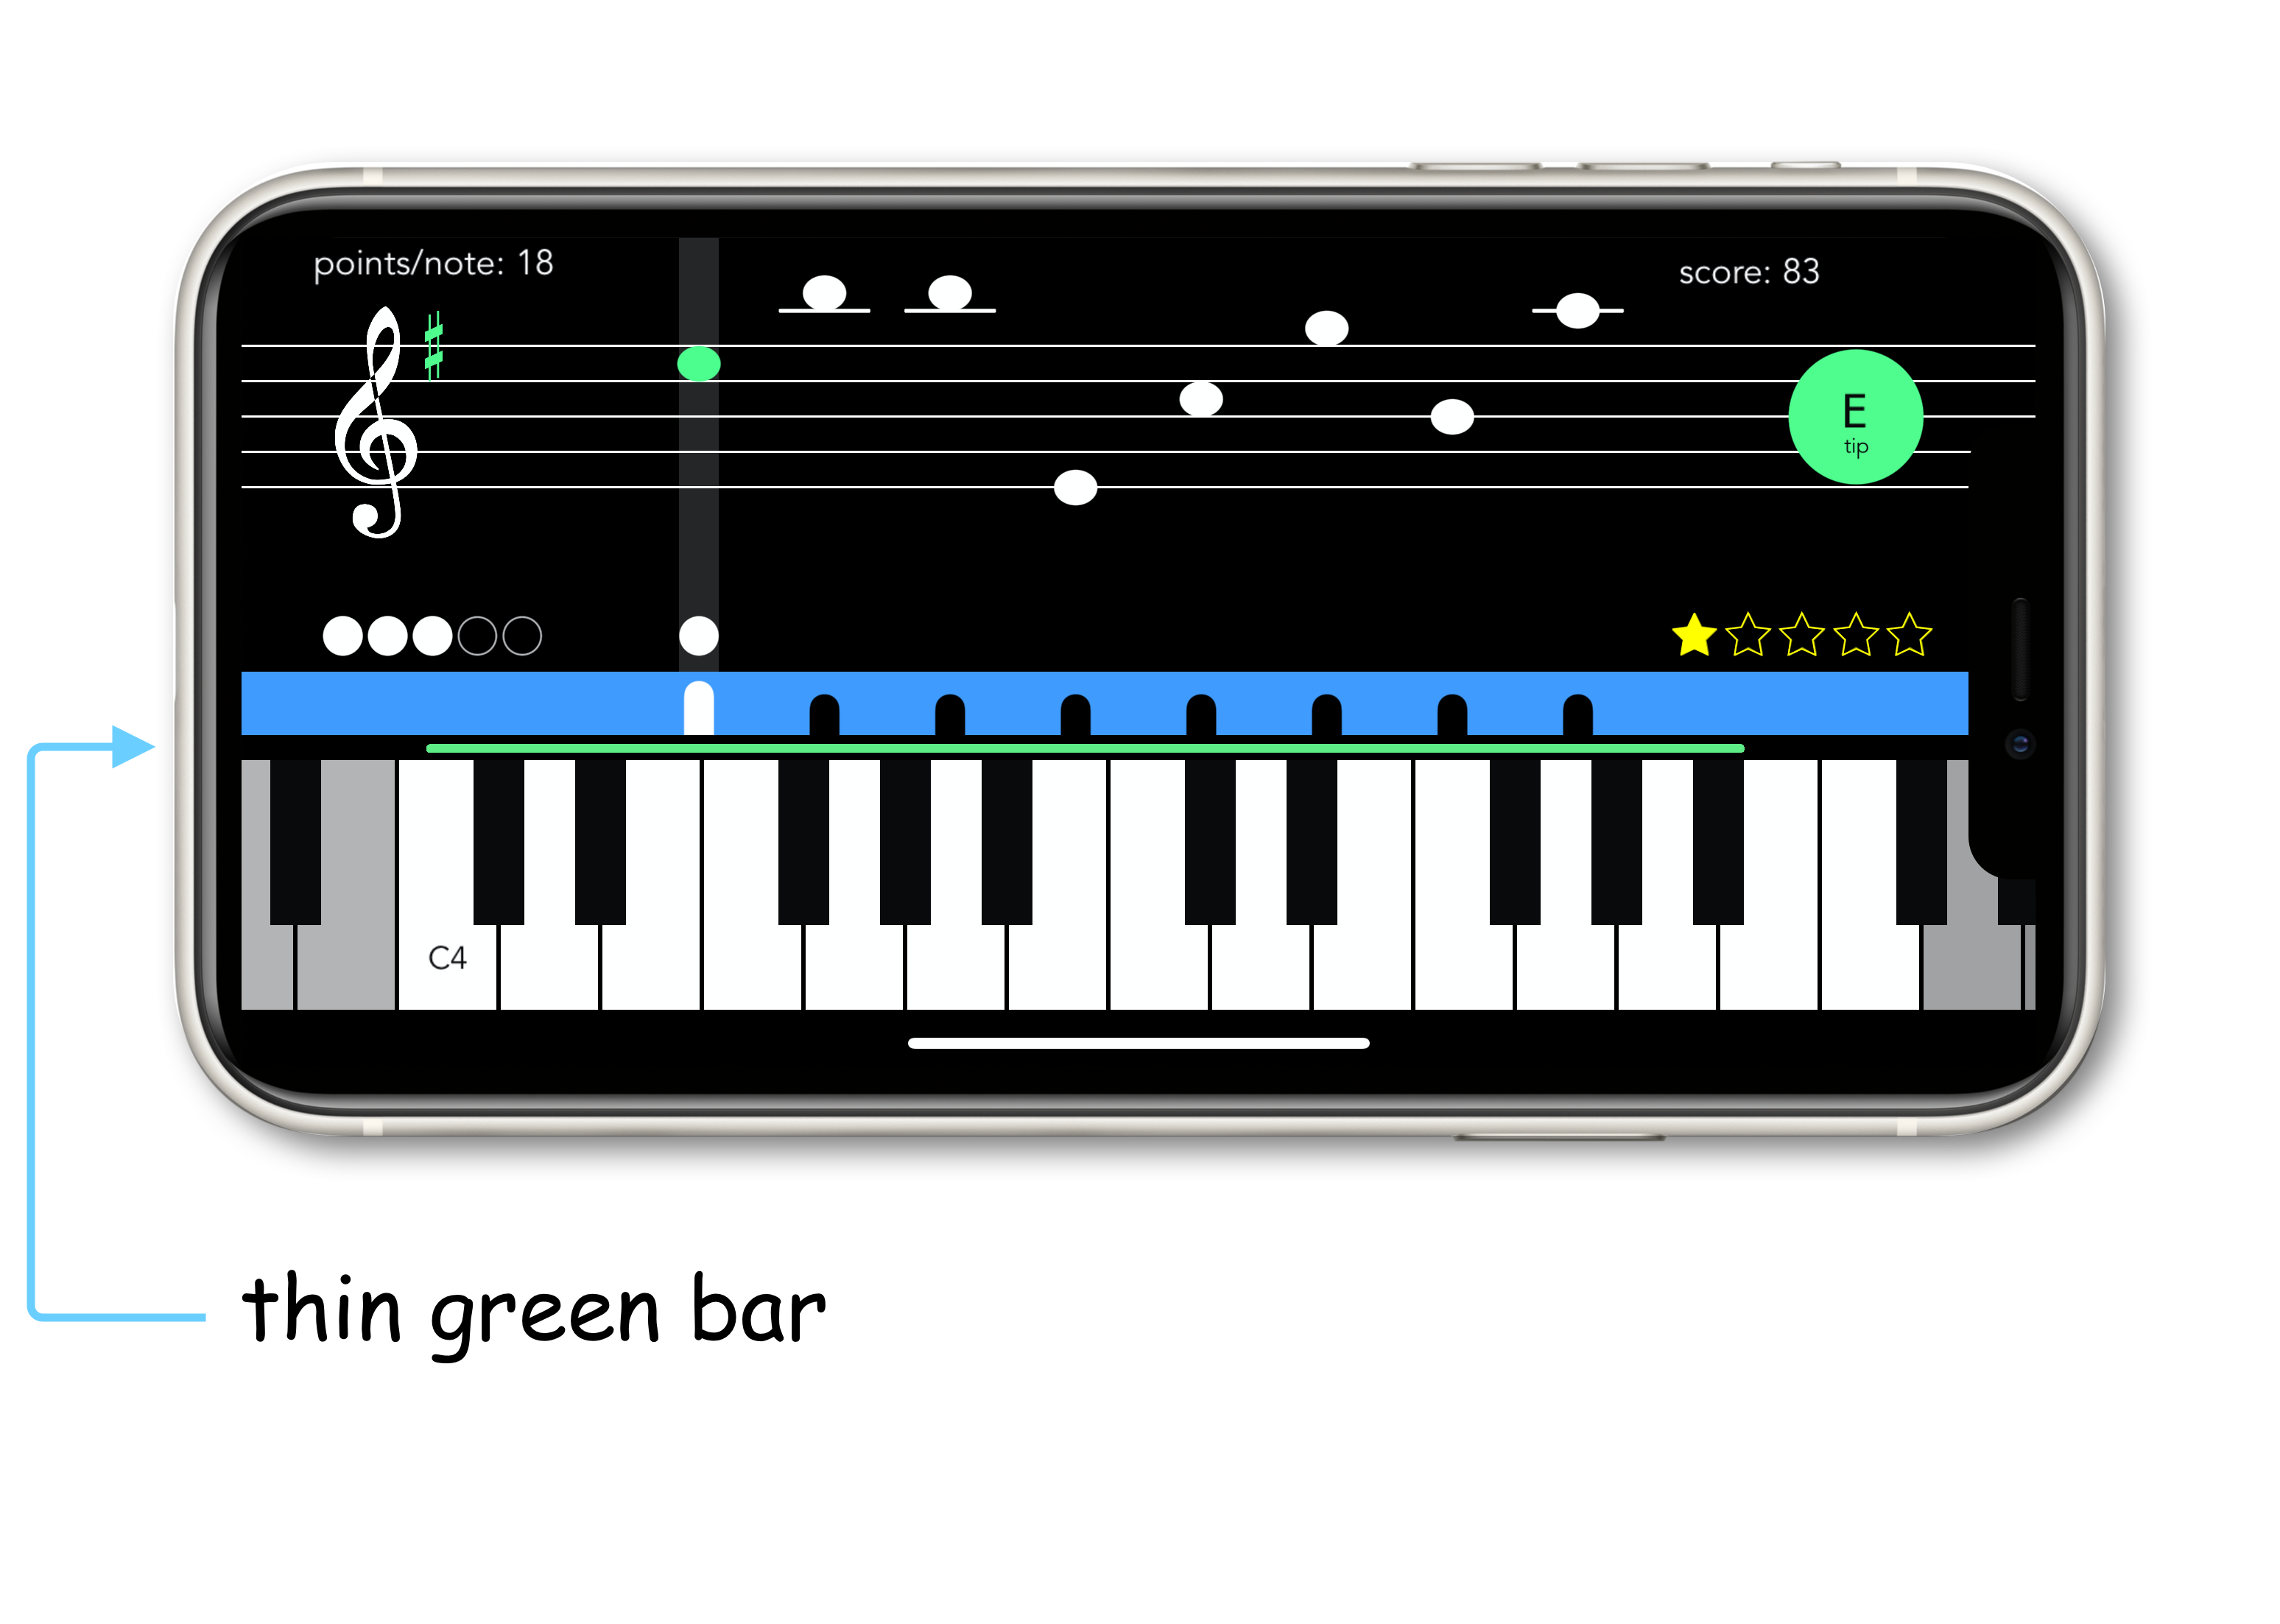 The thin green bar